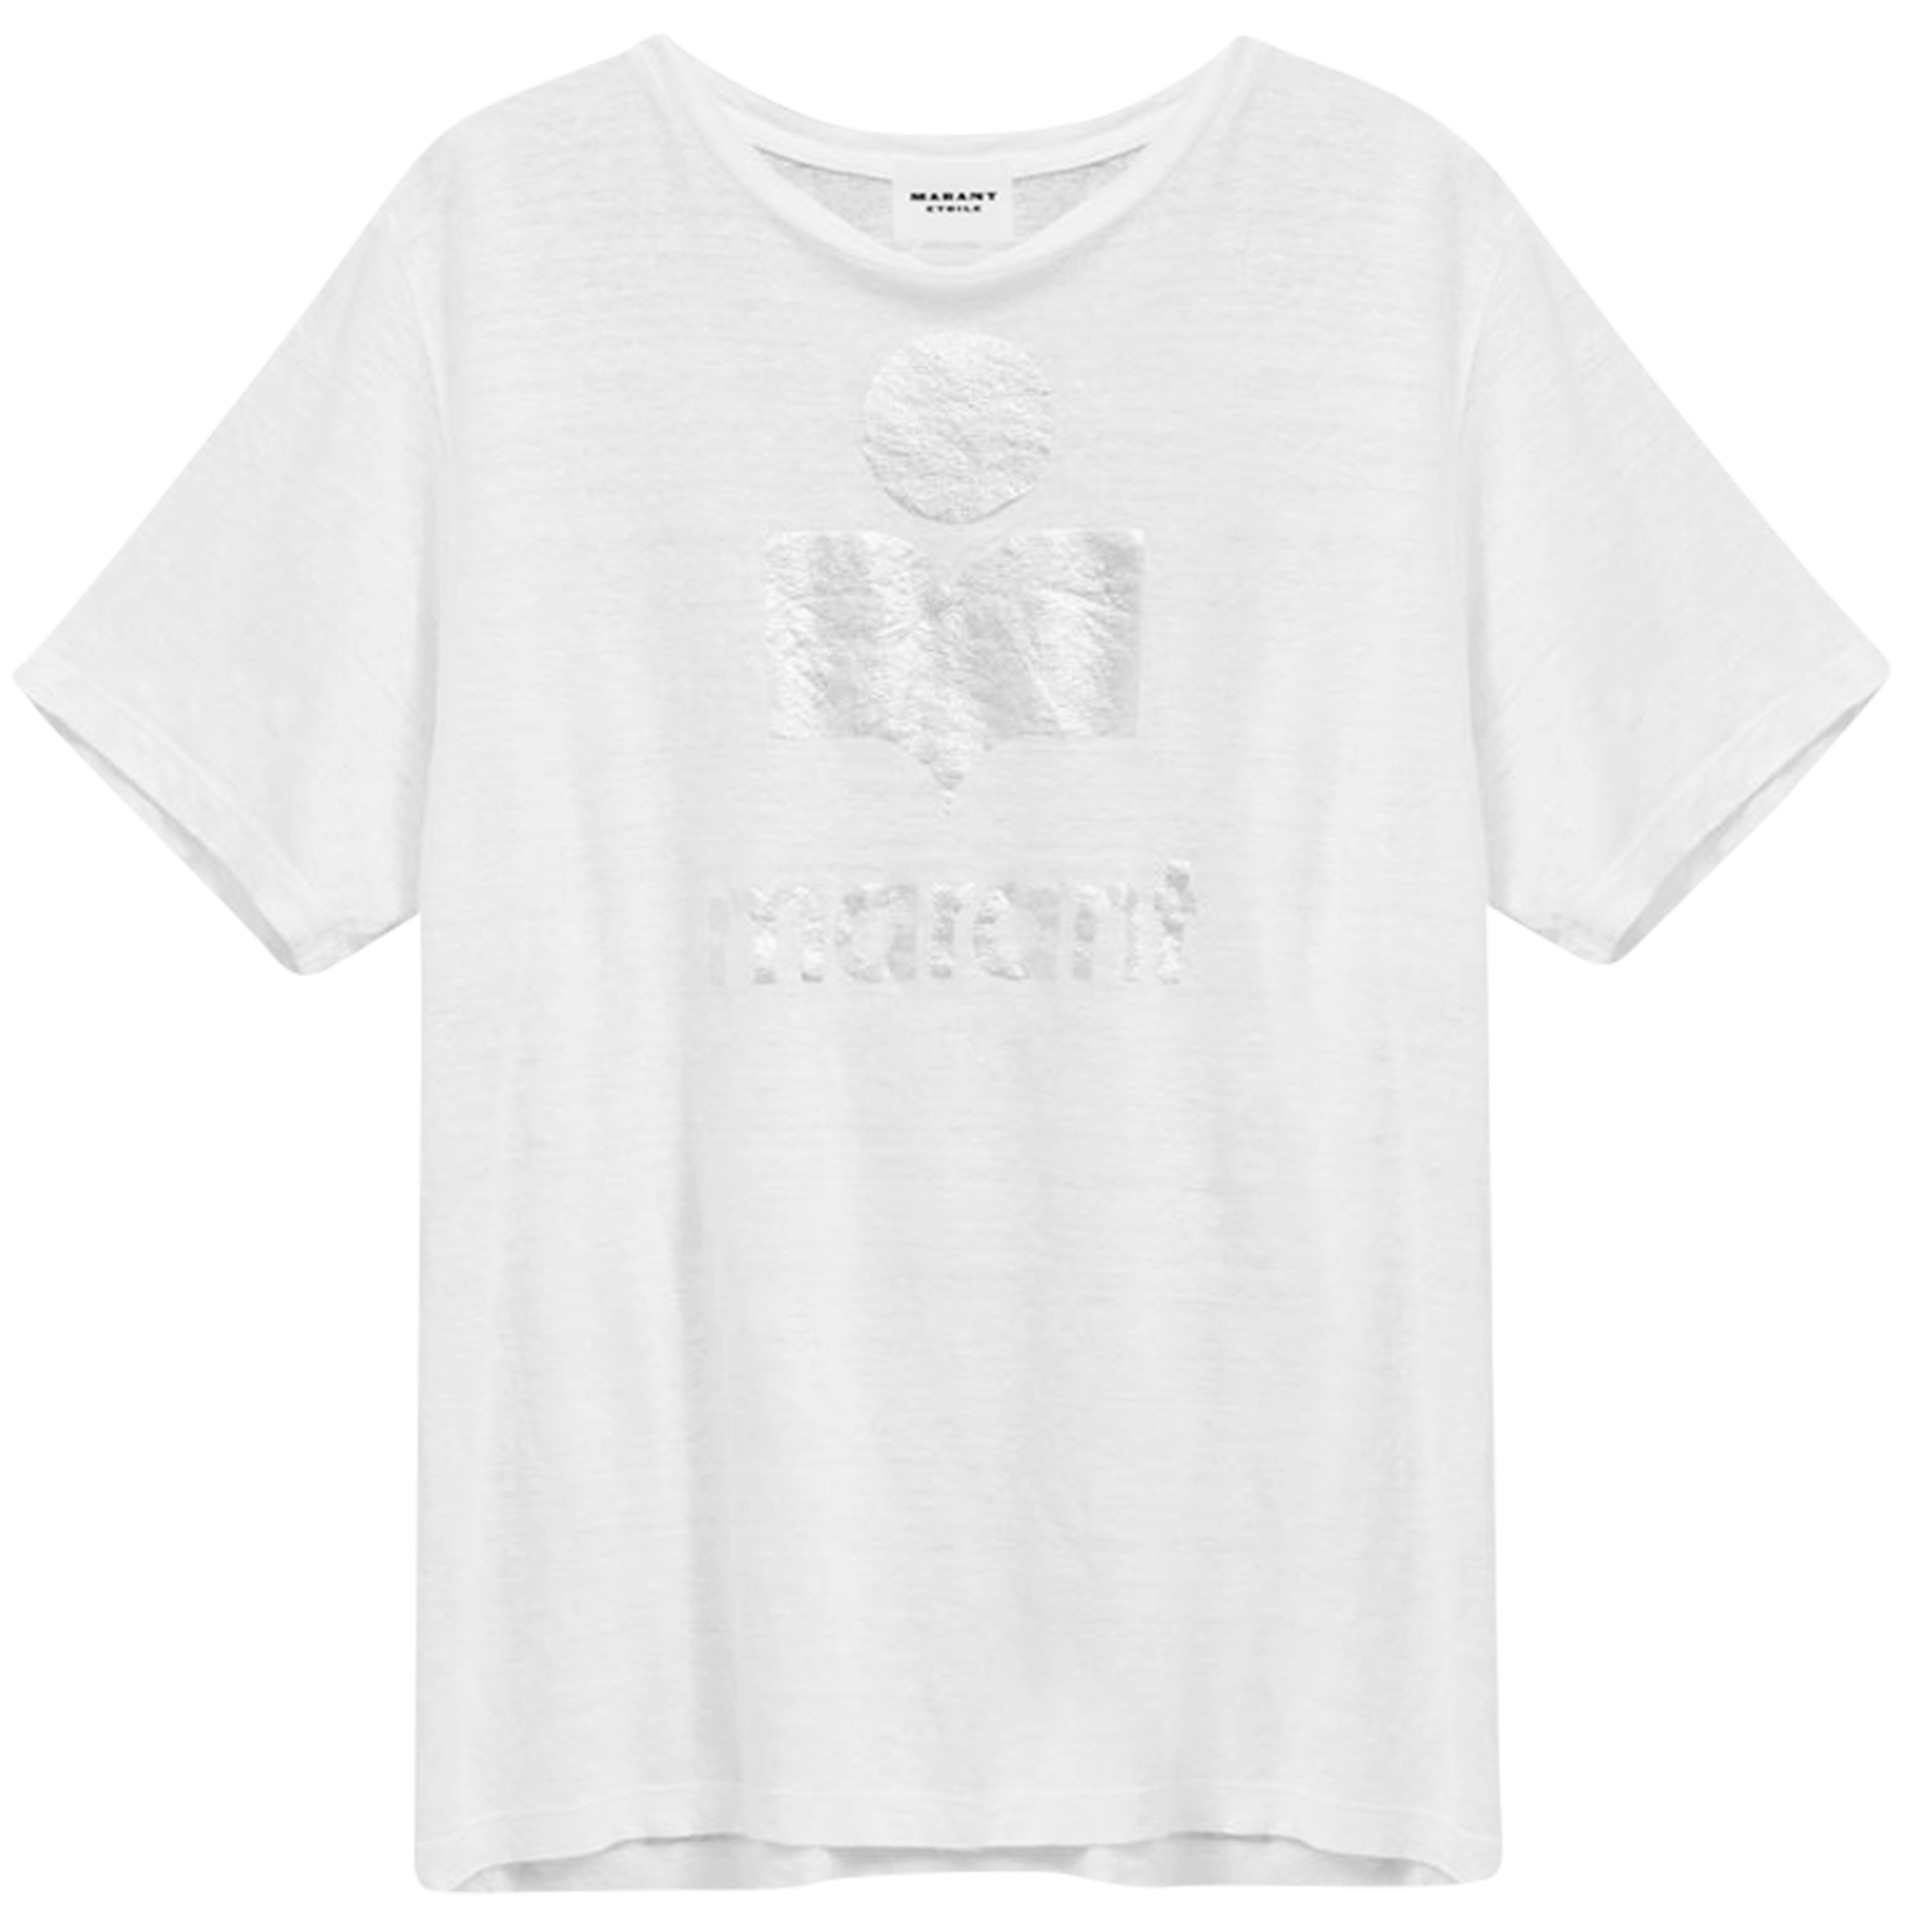 ISABEL MARANT ÉTOILE Zewel Logo T-Shirt in White/Silver